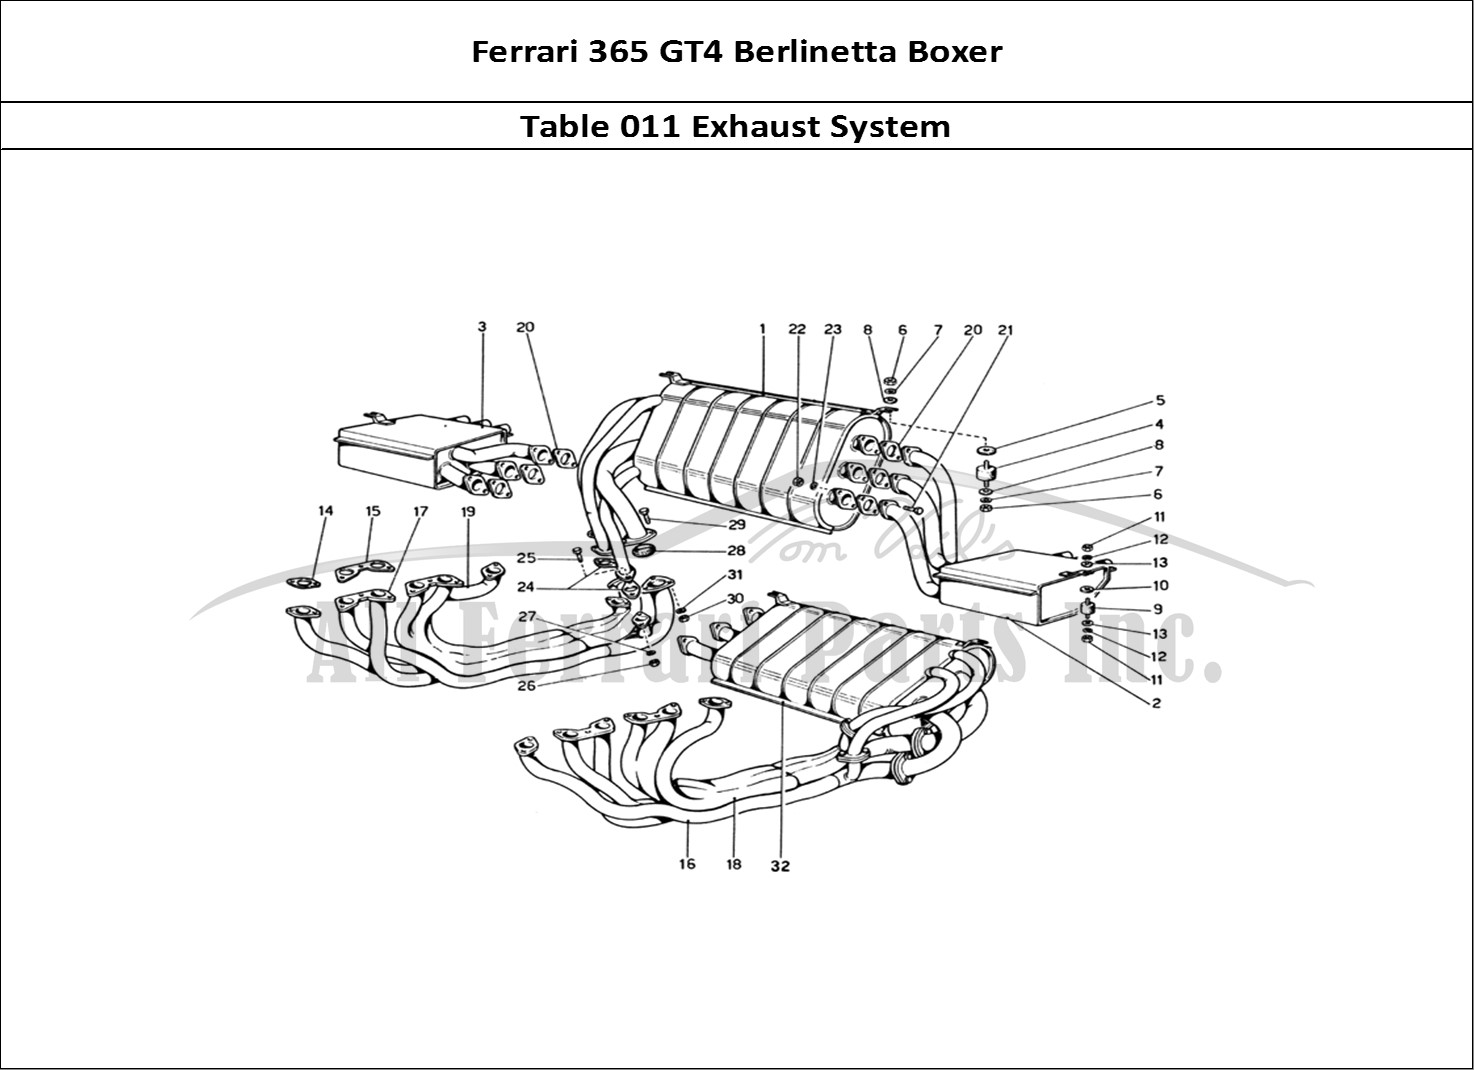 Ferrari Parts Ferrari 365 GT4 Berlinetta Boxer Page 011 Exhaust System